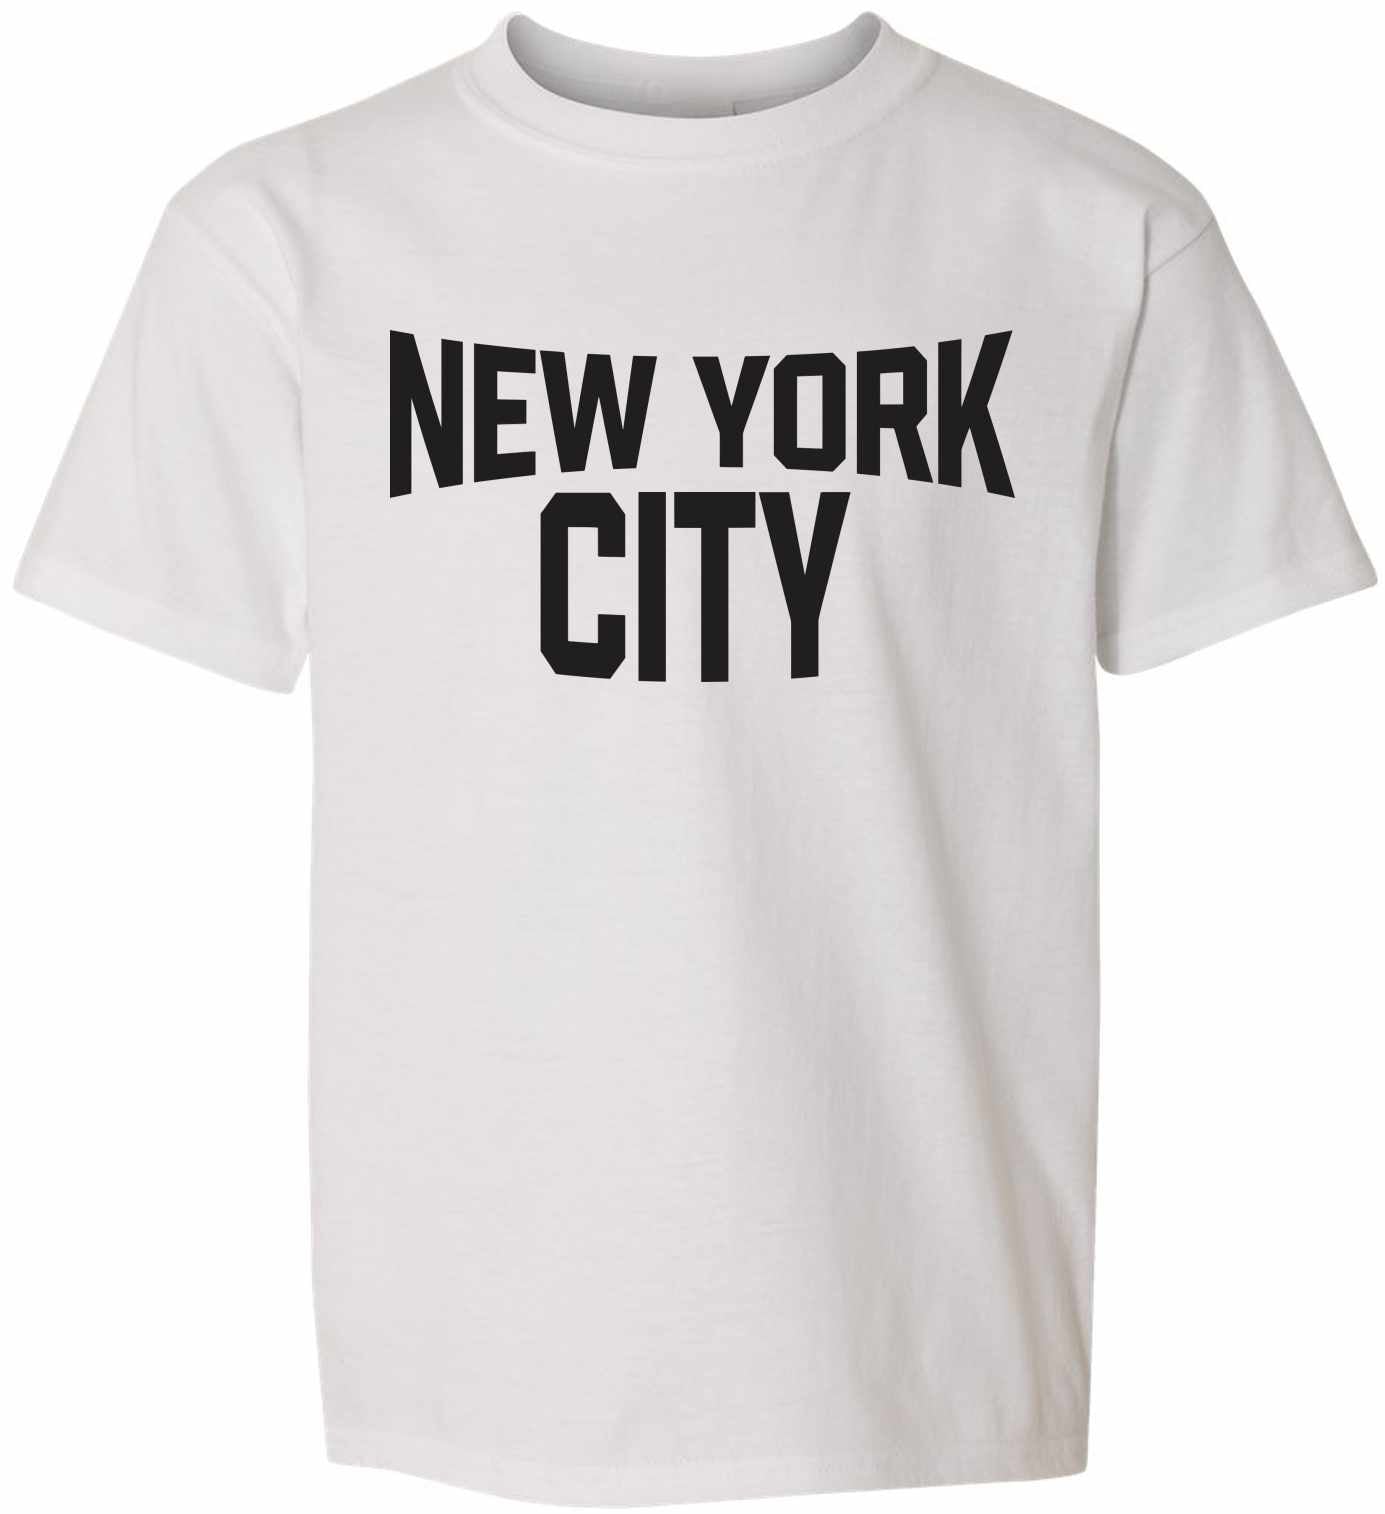 New York City on Kids T-Shirt (#1194-201)